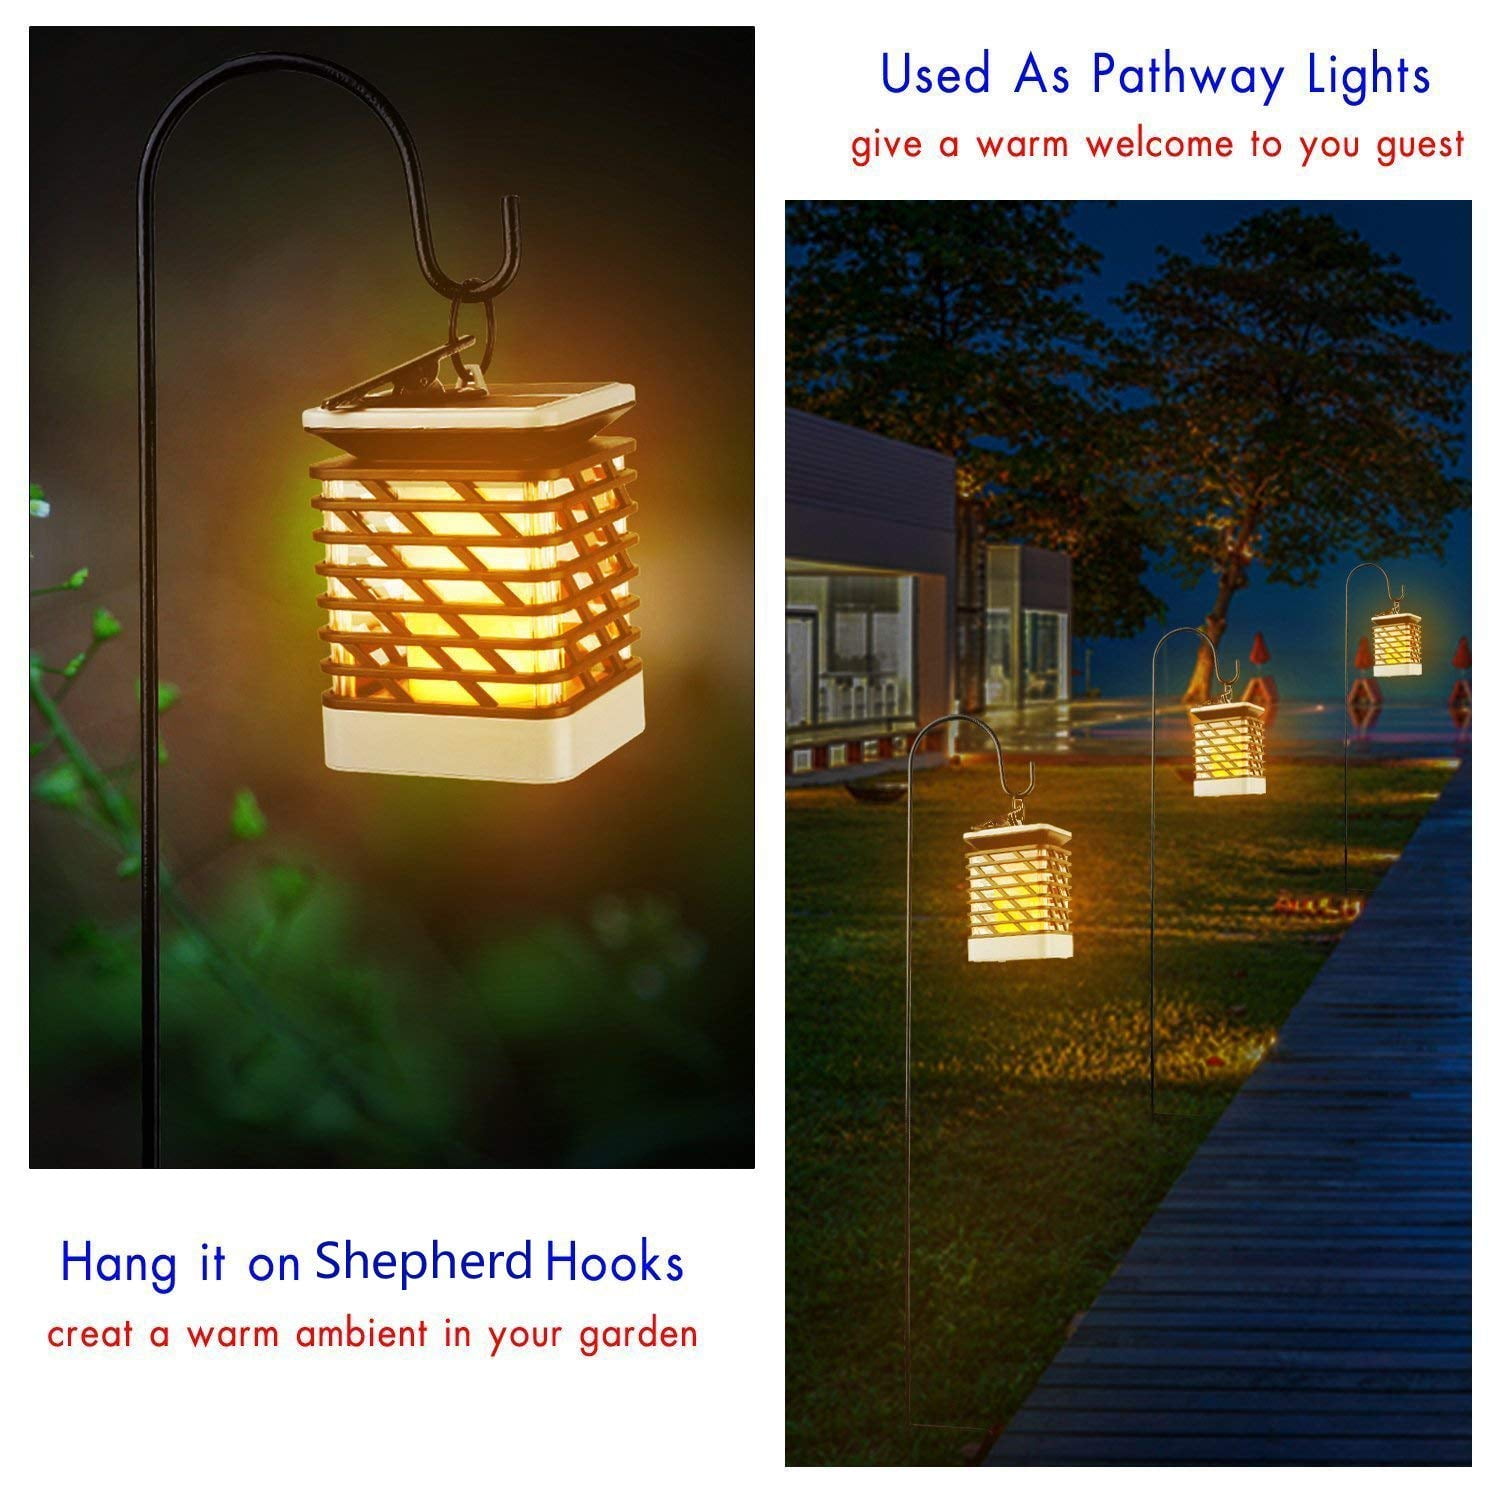 Solar Powered LED Lantern Light Outdoor Garden Landscape Hanging Lamp New